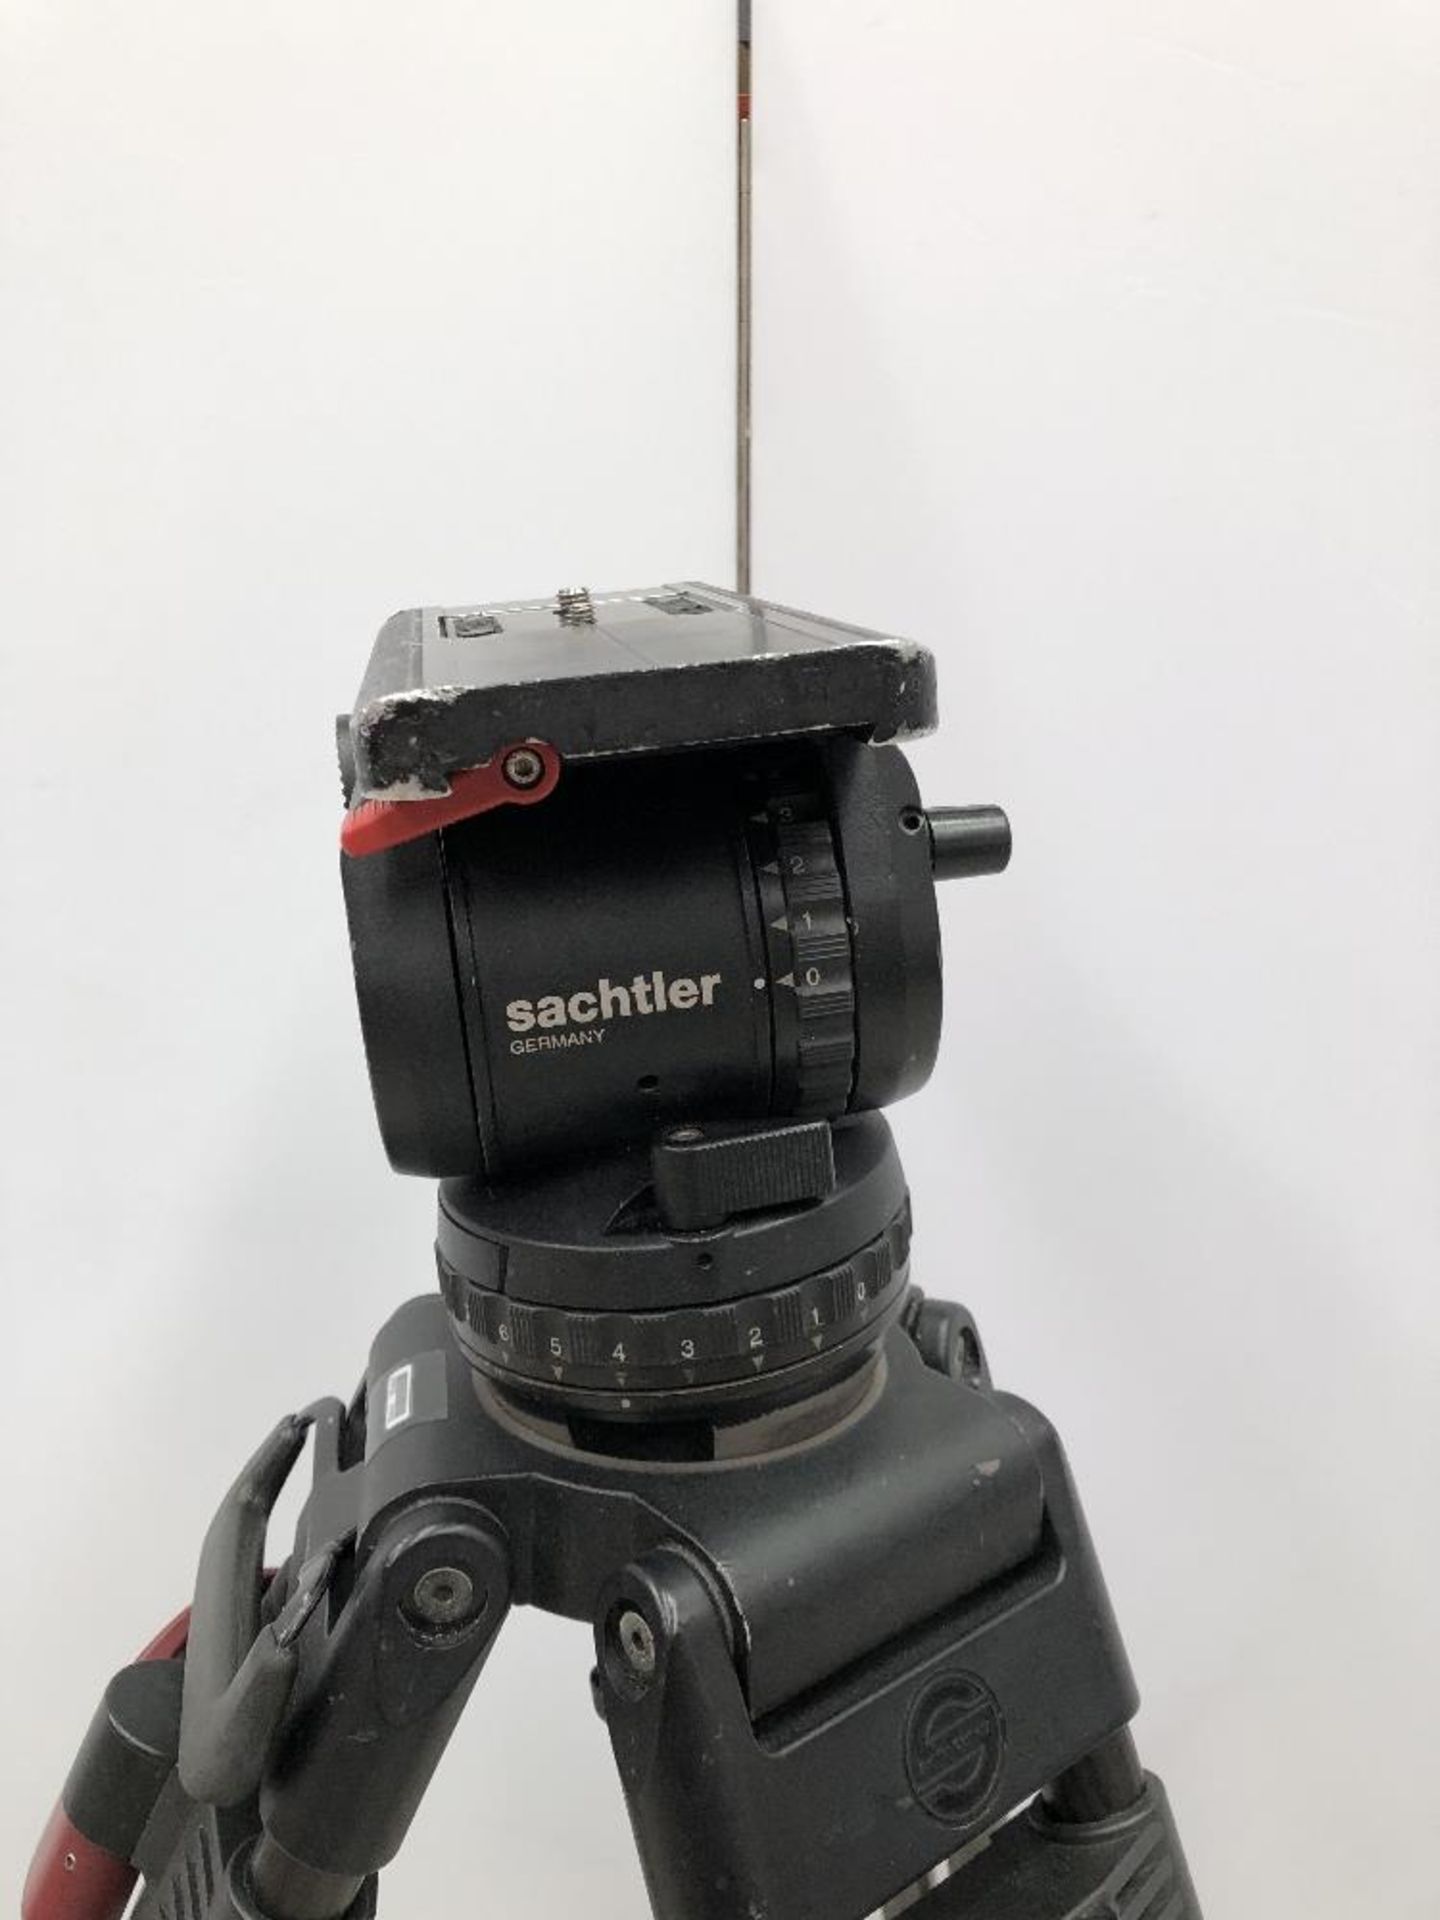 Sachtler V18 S1 Carbon Fibre Medium Camera Tripod With Fluid Head And Sachtler Carry Bag - Image 5 of 5